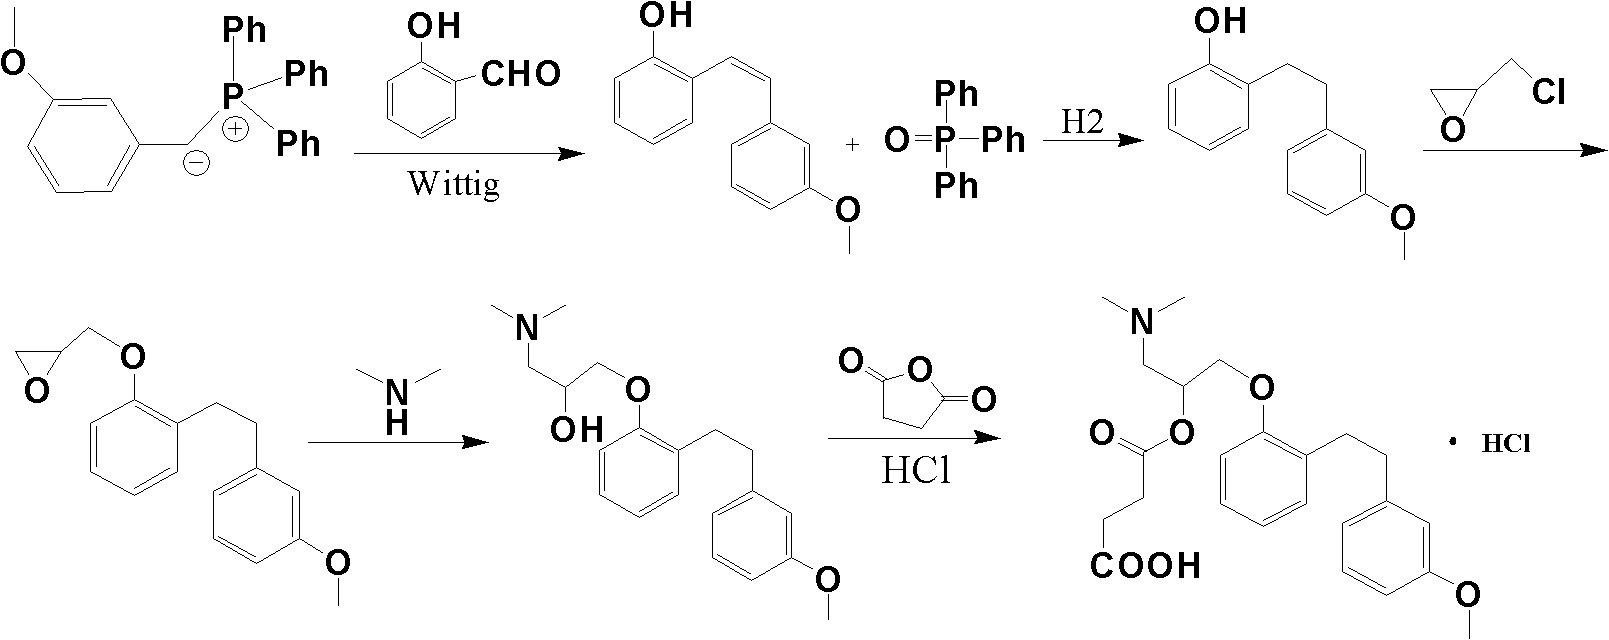 Preparation method of sarpogrelate hydrochloride